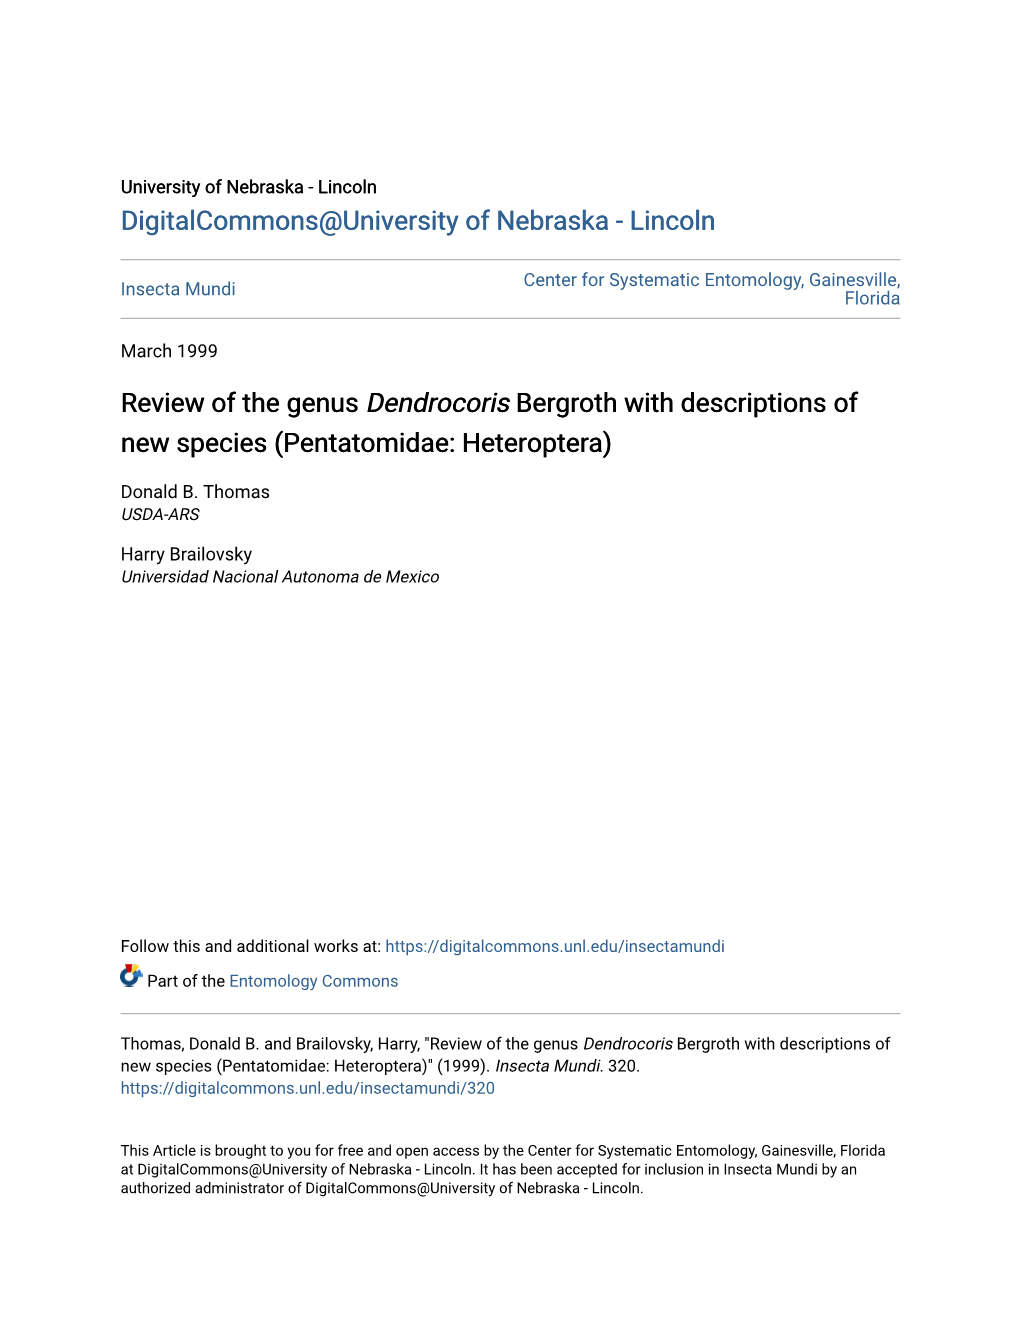 Review of the Genus Dendrocoris Bergroth with Descriptions of New Species (Pentatomidae: Heteroptera)